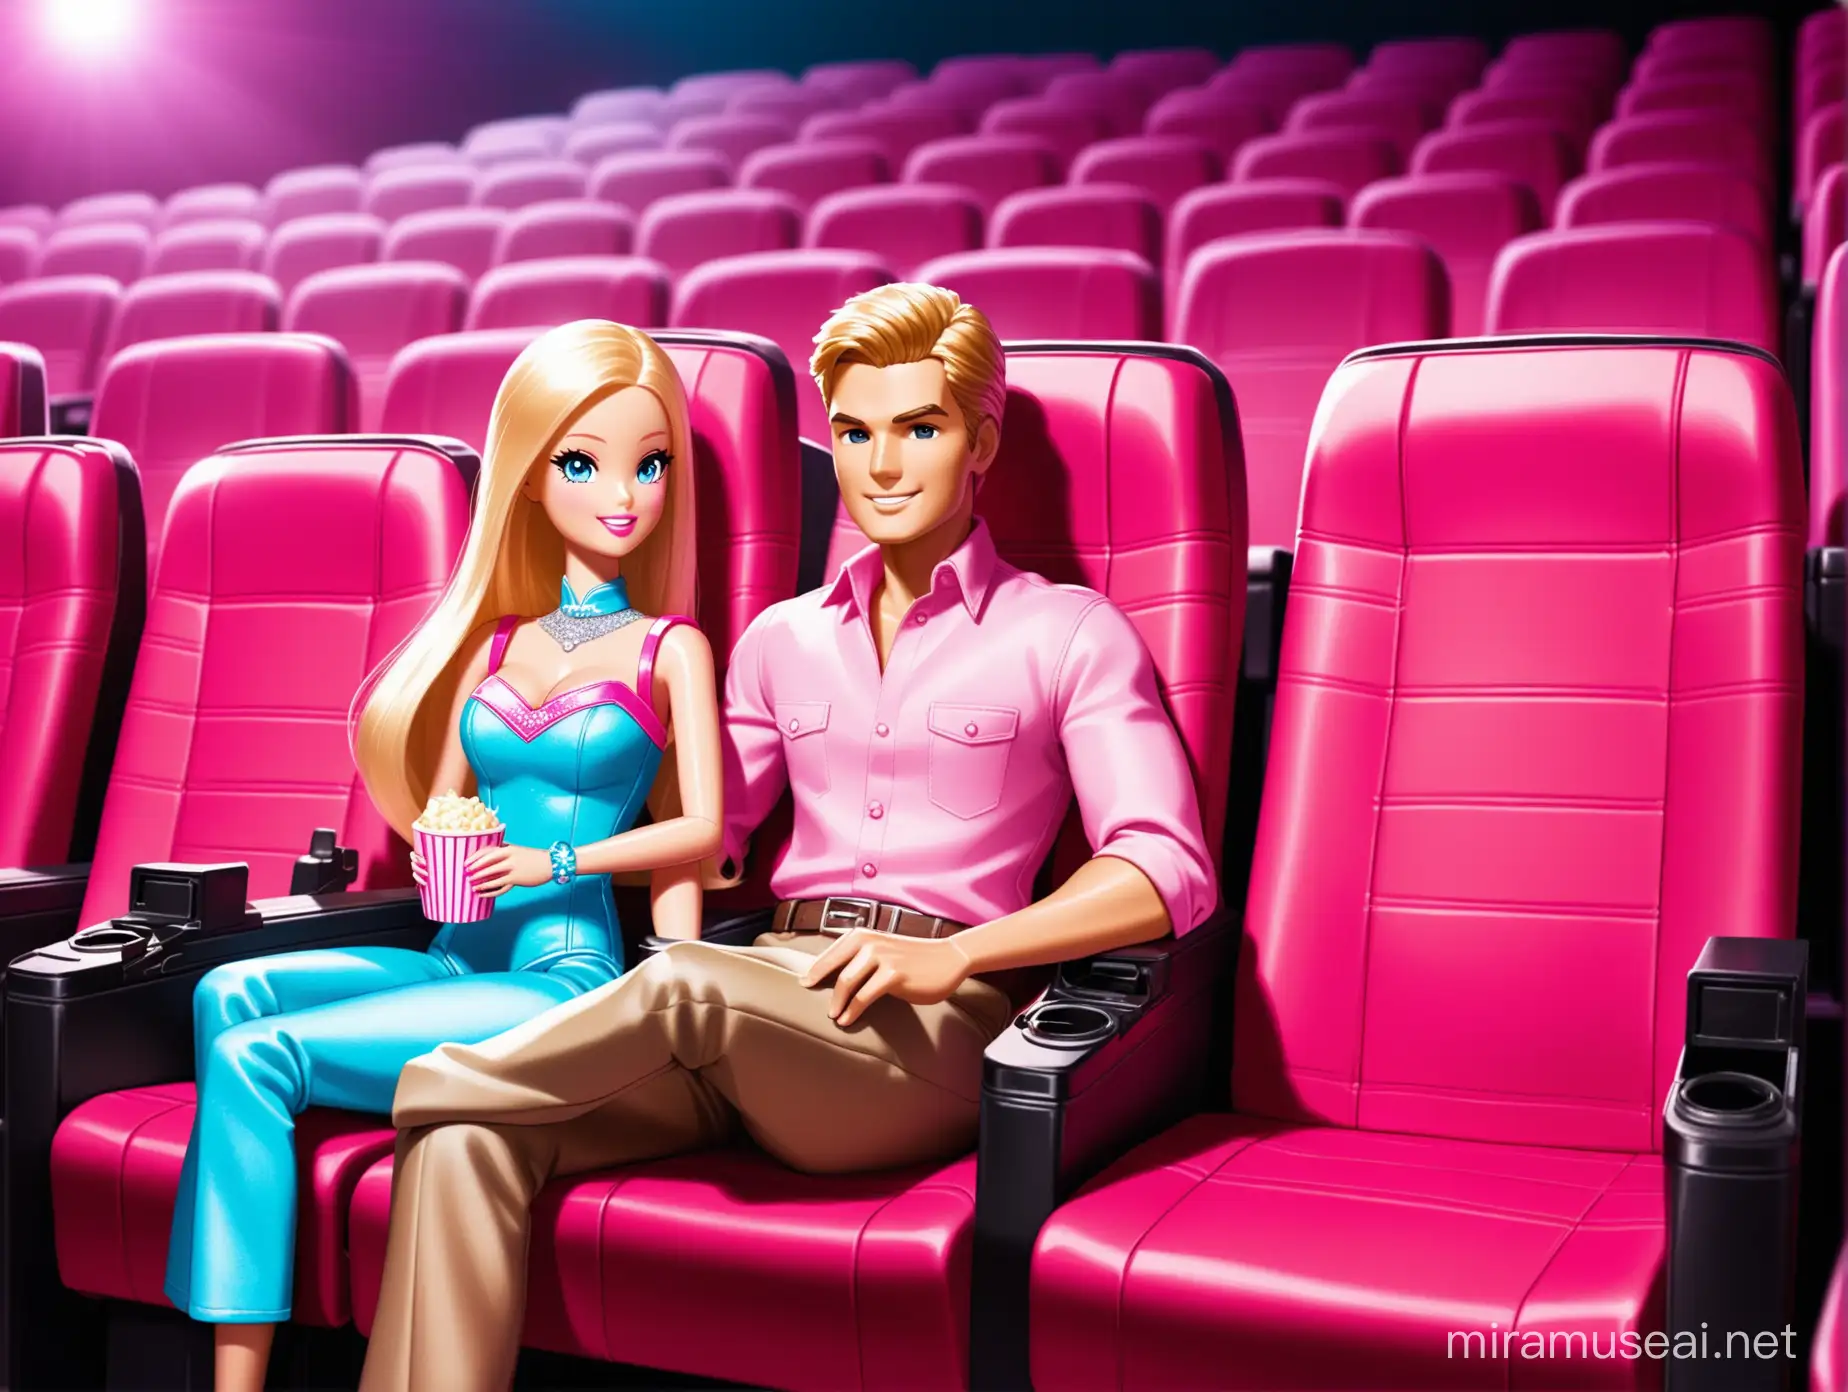 Ken and Barbie Enjoying a Romantic Movie Date in Cinema